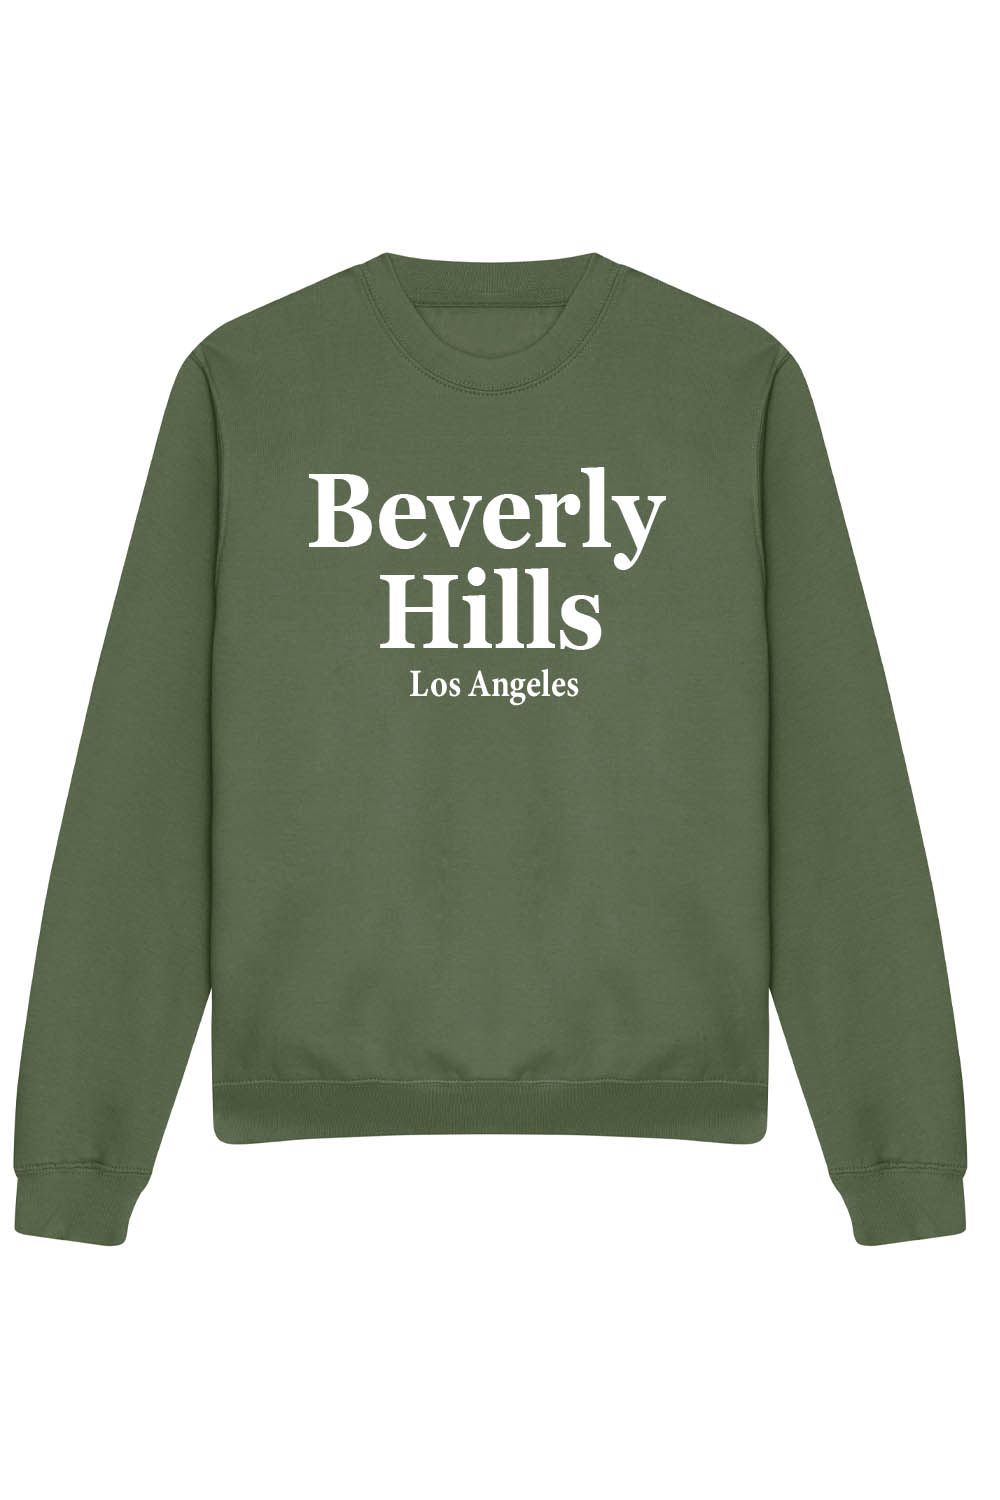 Beverly Hills Sweatshirt in Earthy Green (Custom Pack)